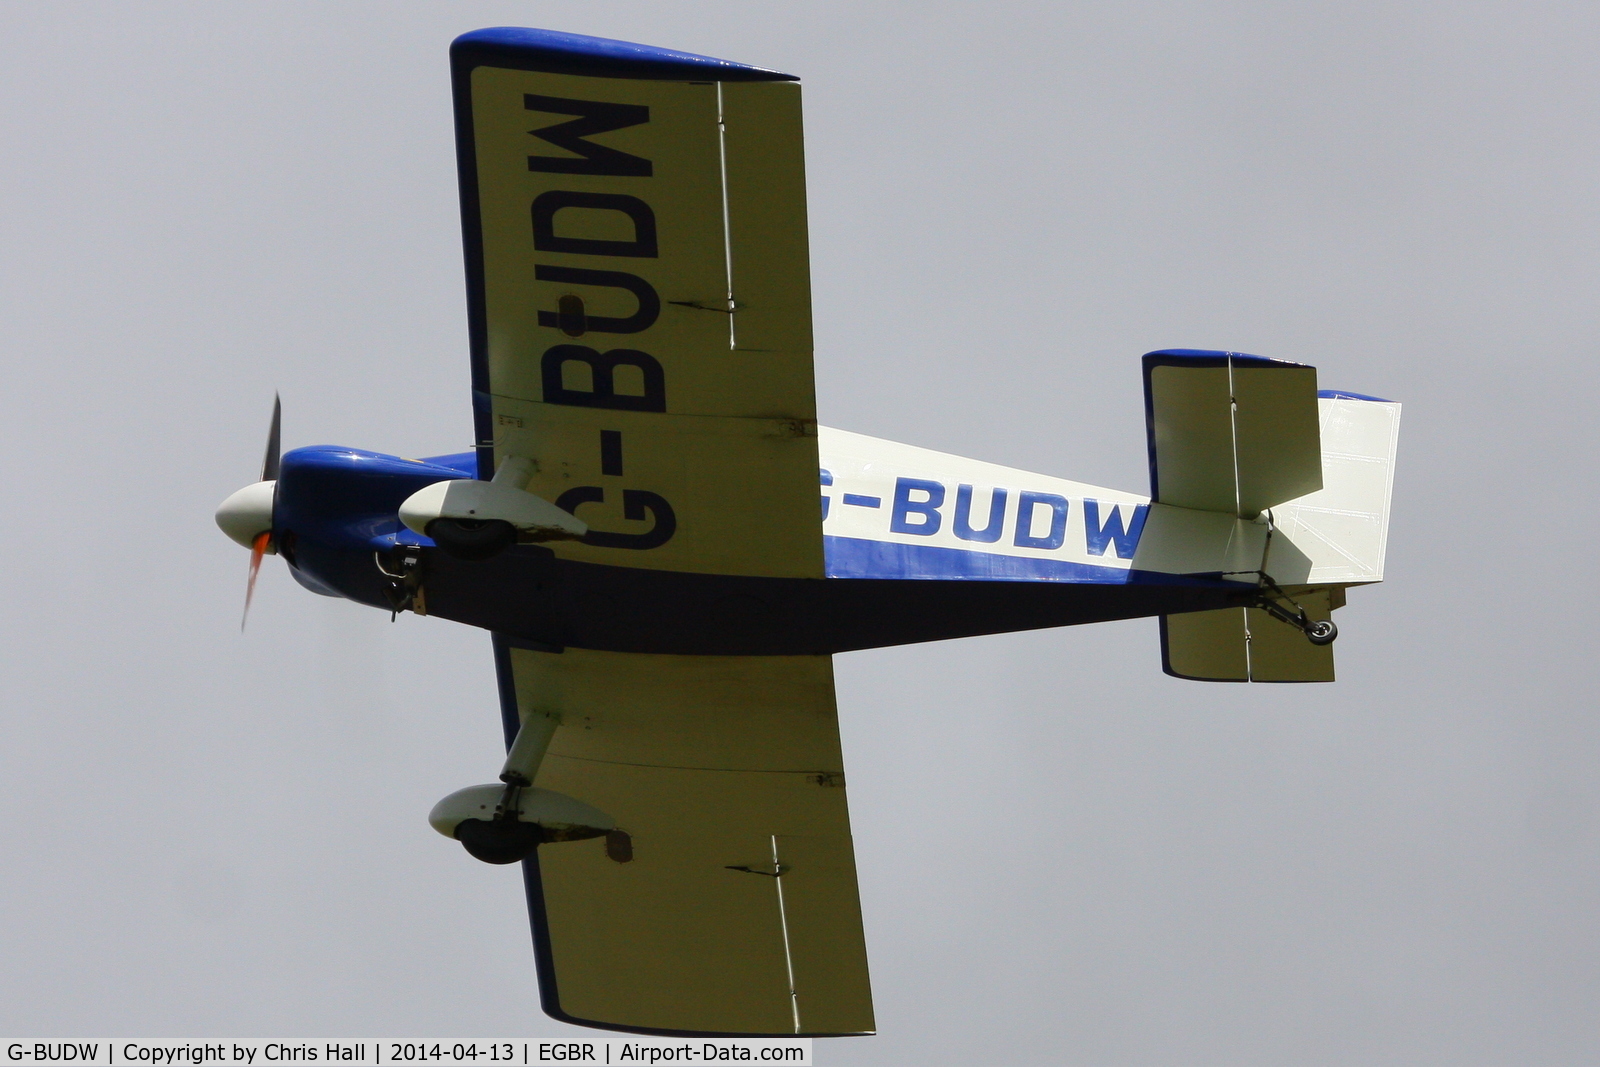 G-BUDW, 1992 Brugger MB-2 Colibri C/N PFA 043-10644, at Breighton's 'Early Bird' Fly-in 13/04/14